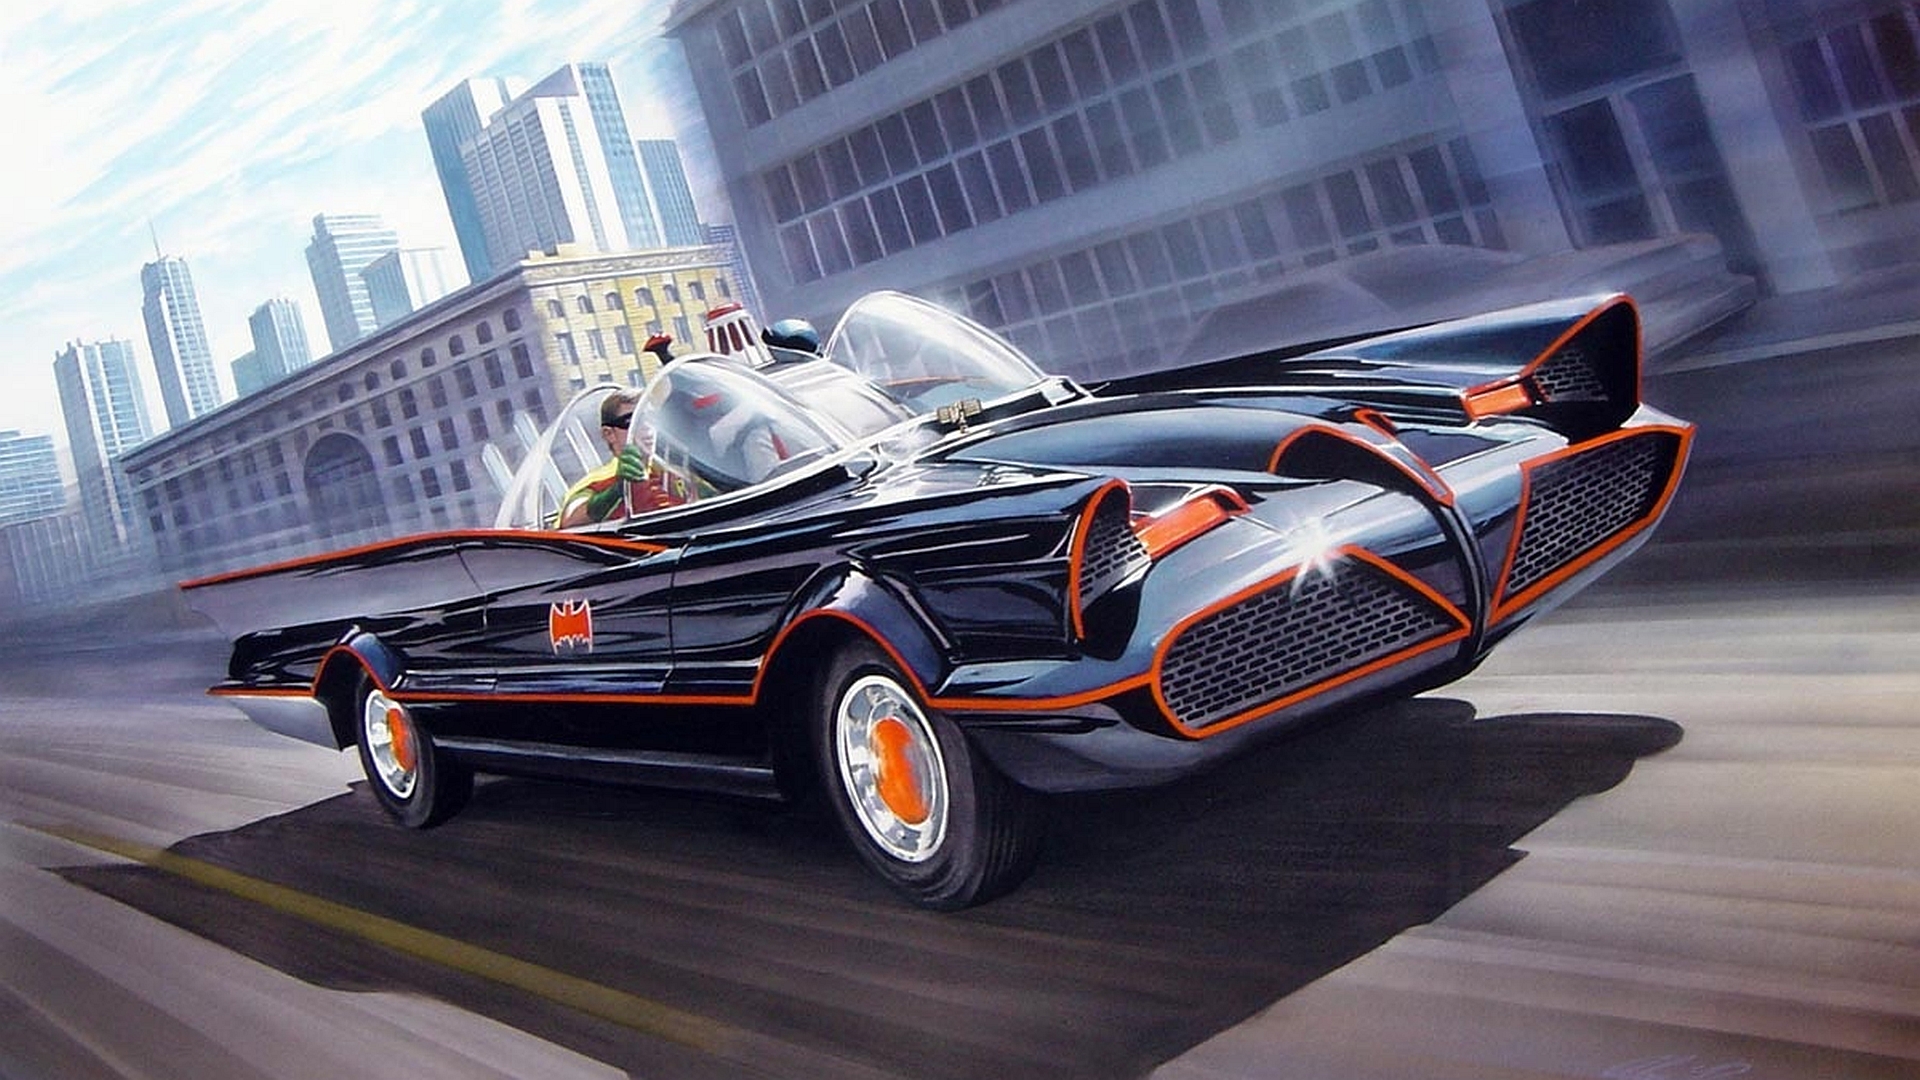 General 1920x1080 DC Comics TV Batman and Robin Batman Batmobile car artwork vehicle